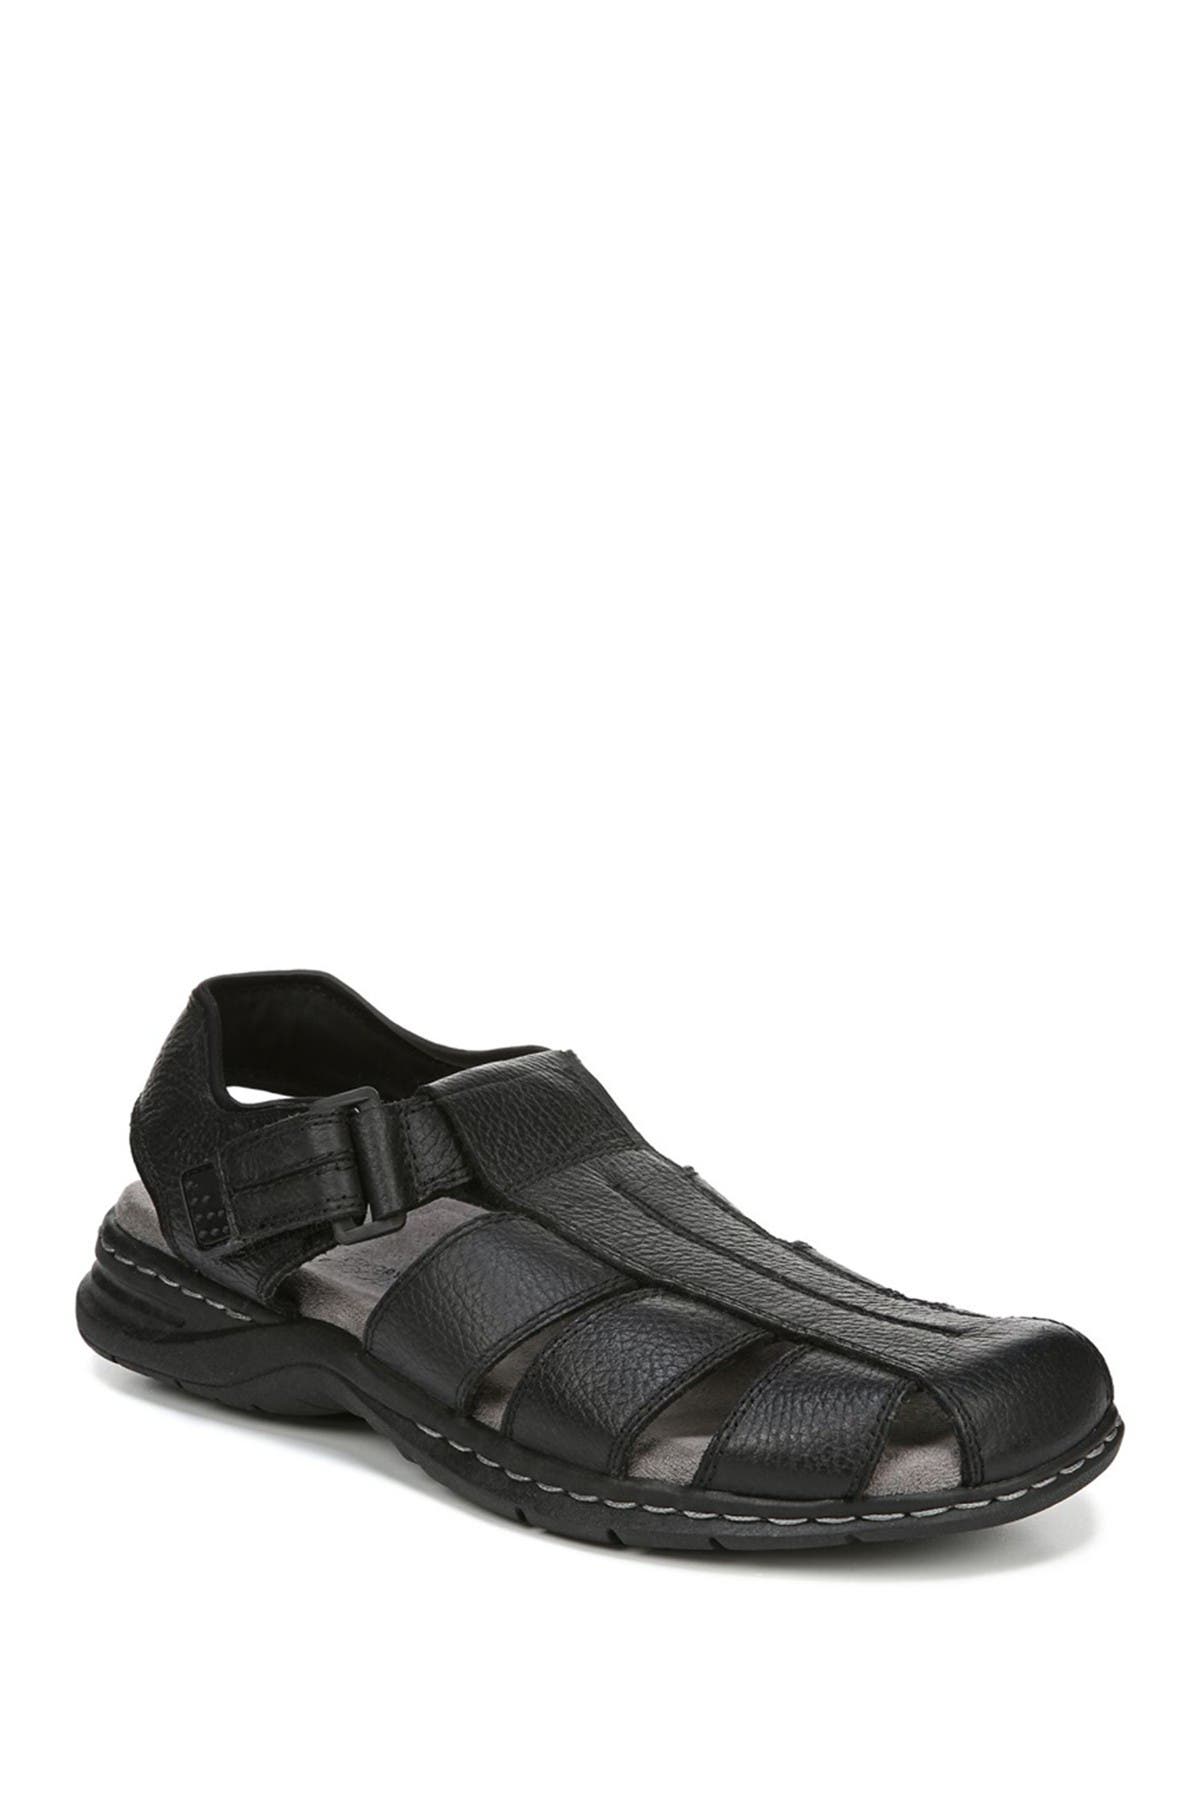 Dr. Scholl's Gaston Leather Sandal In Black